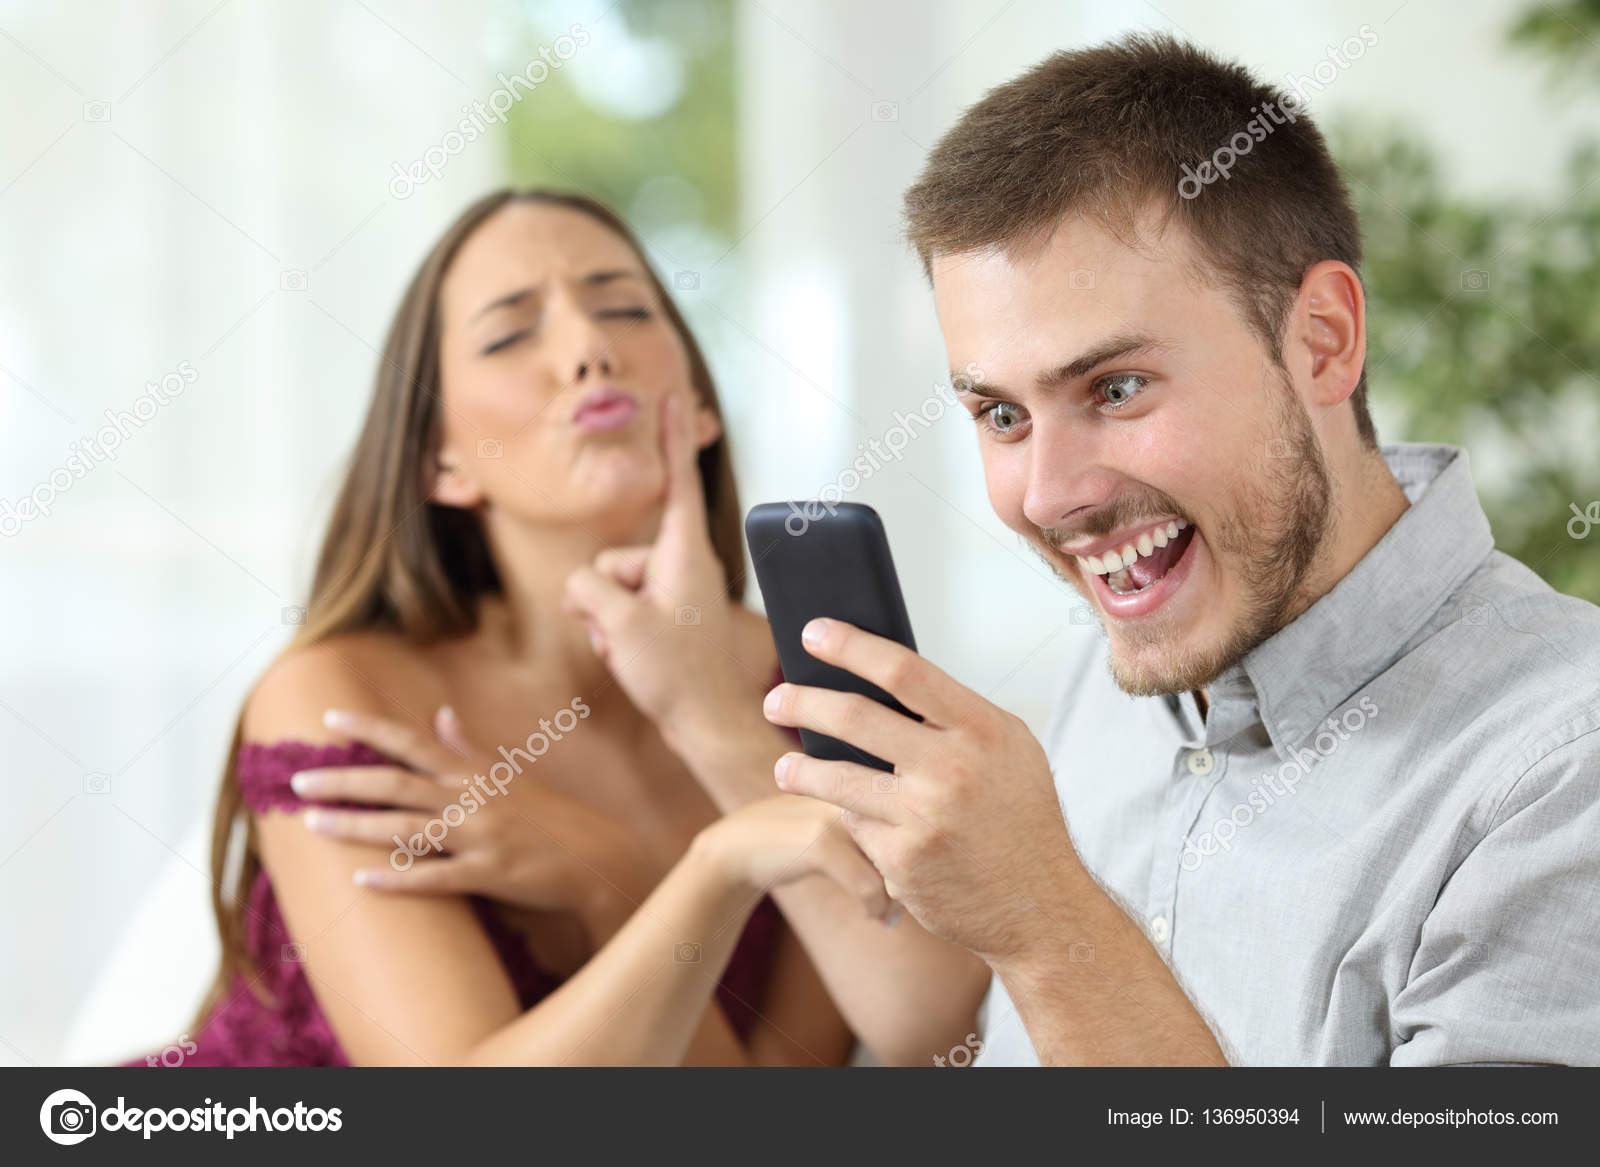 My Girlfriend Selfie For Phone Sex